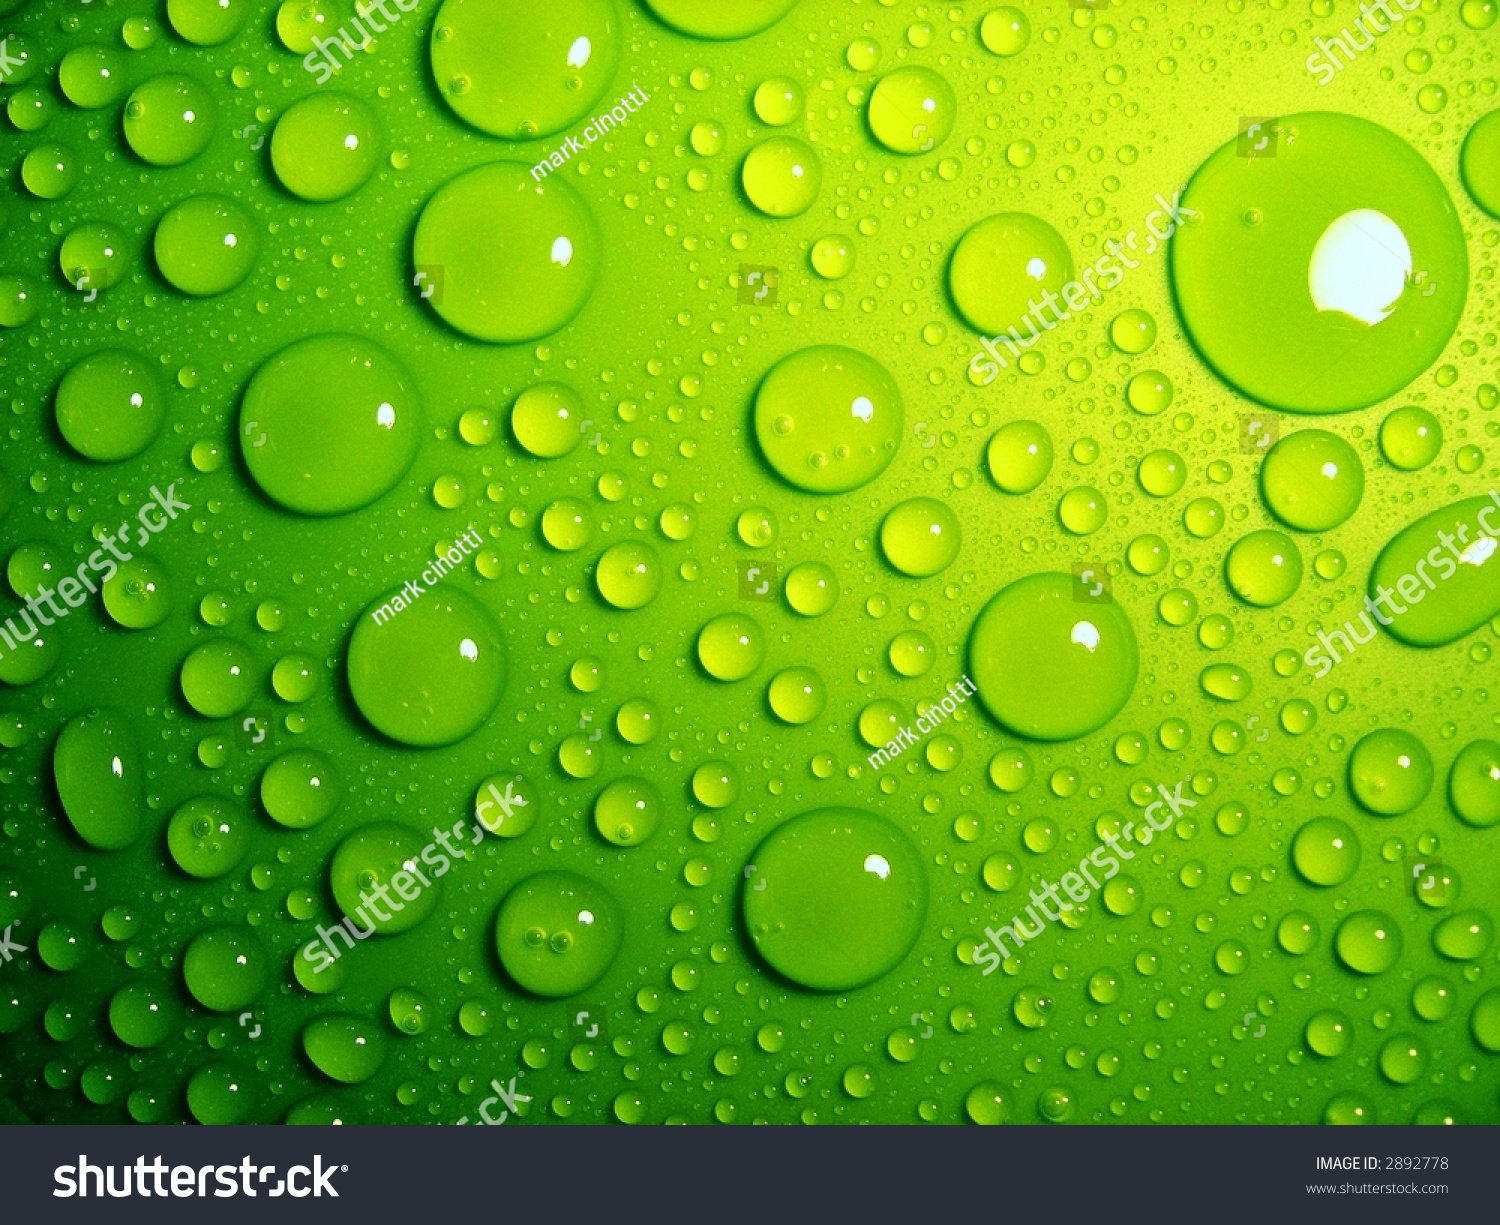 Water-Drops On Green Stock Photo 2892778 : Shutterstock